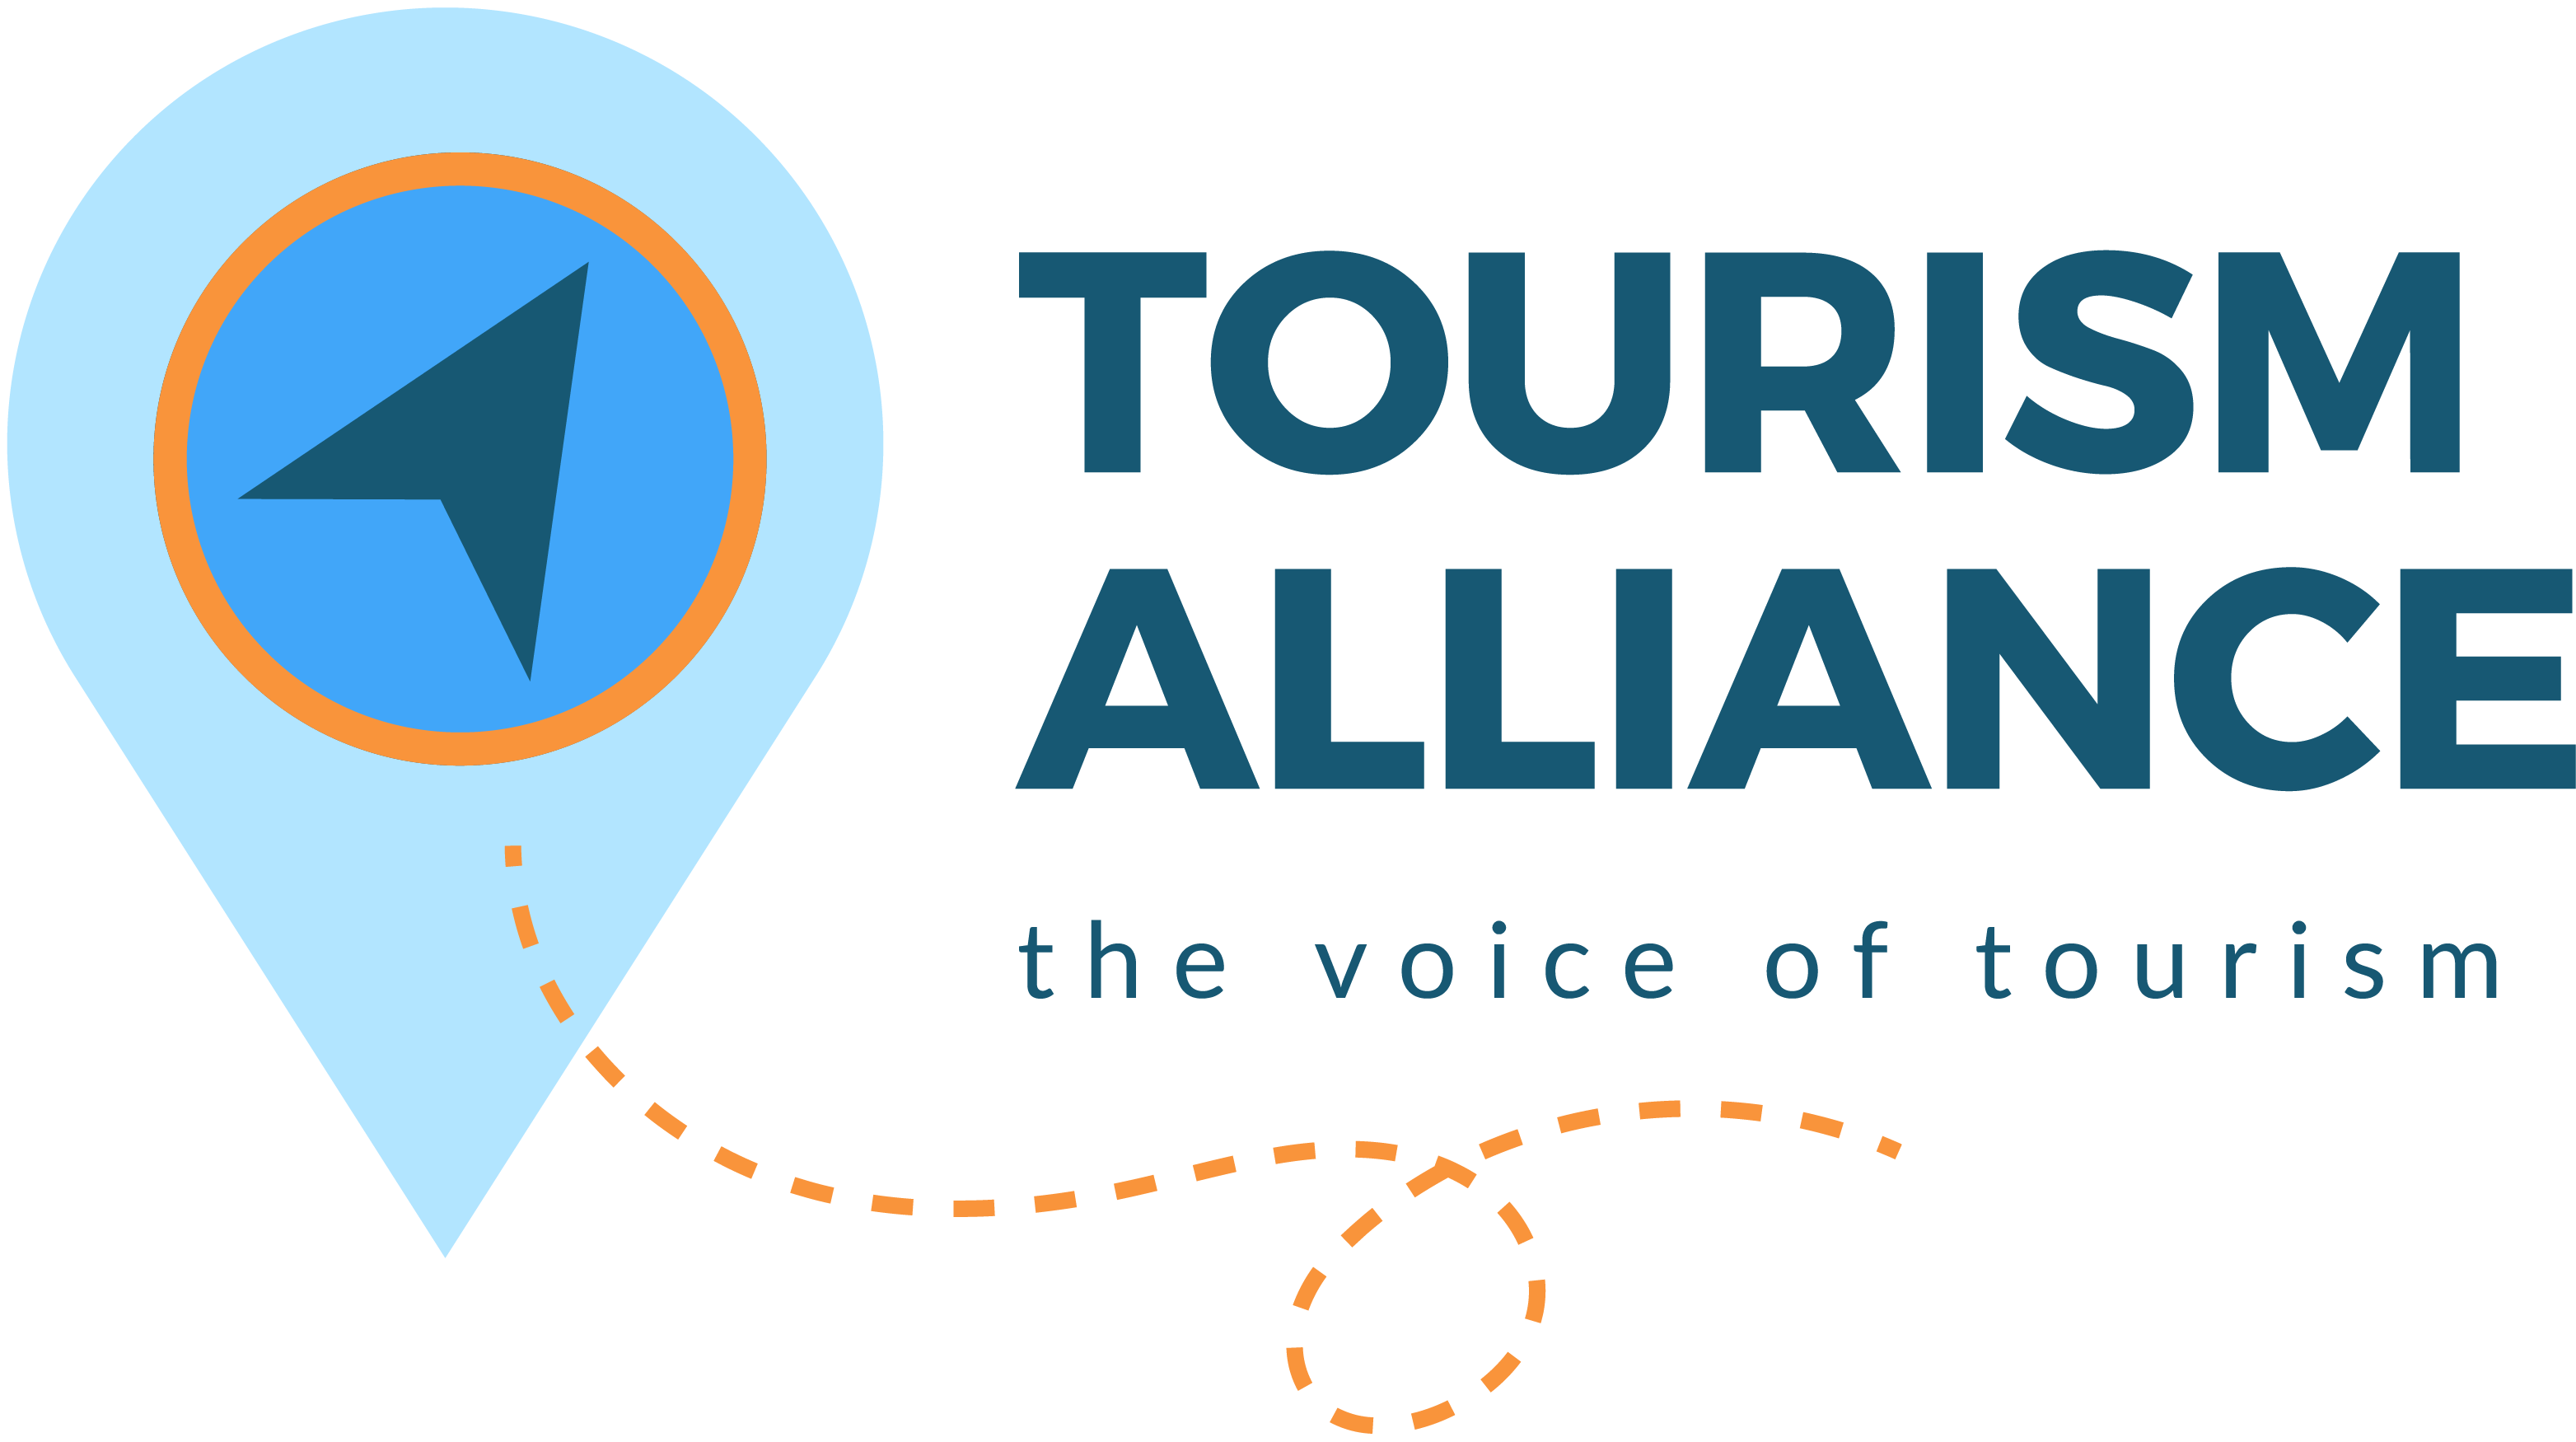 Tourism Alliance